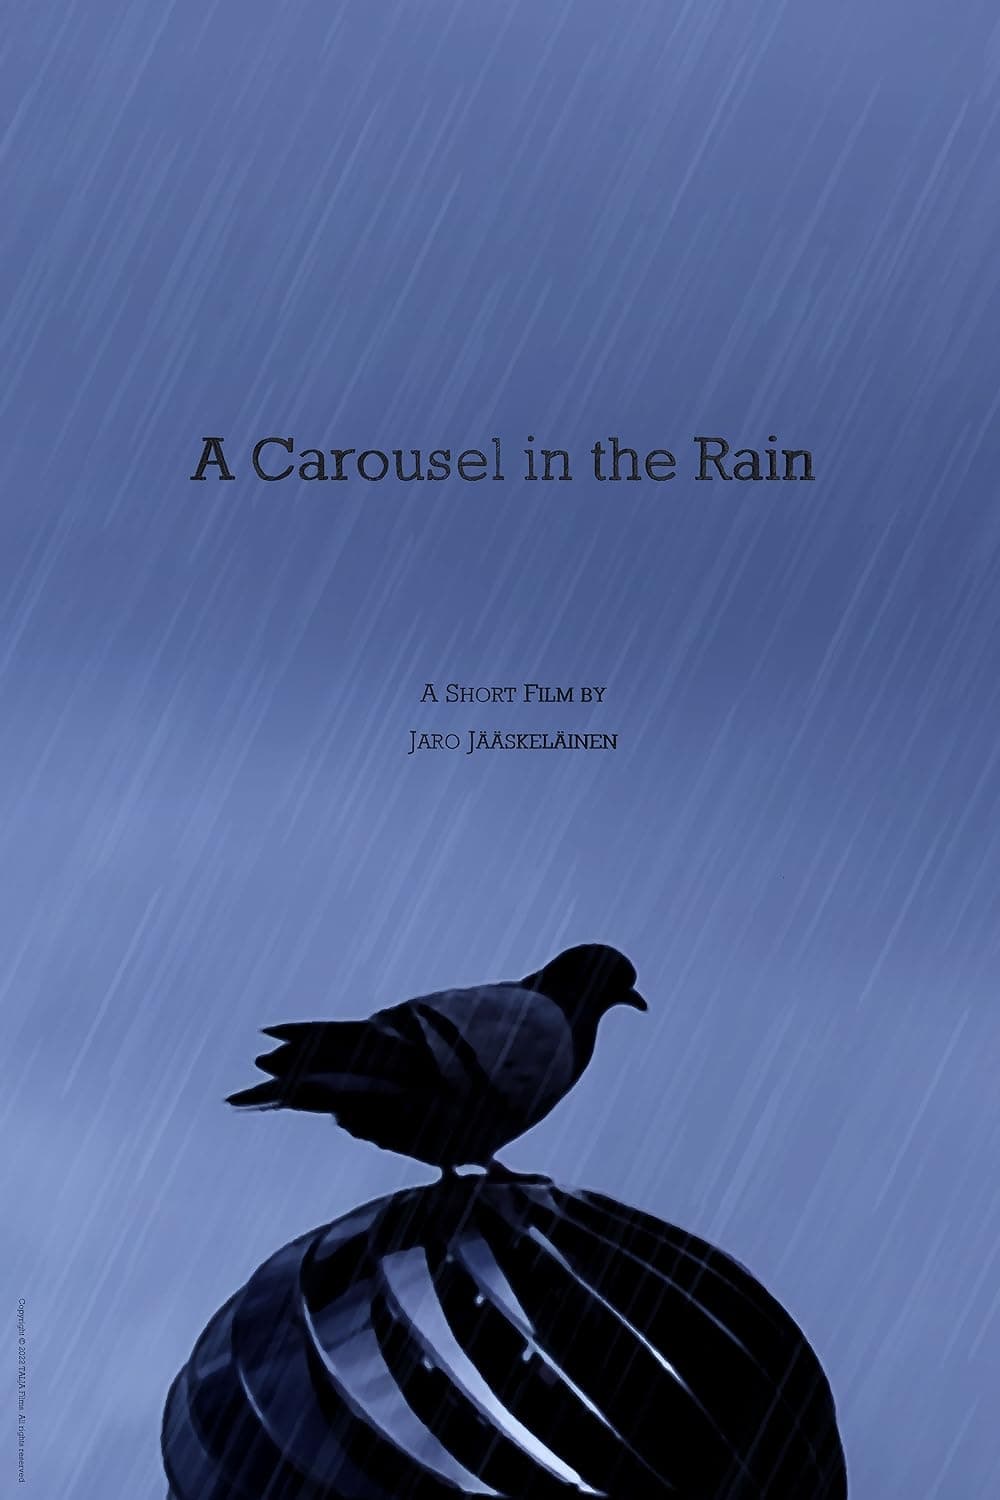 A Carousel in the Rain